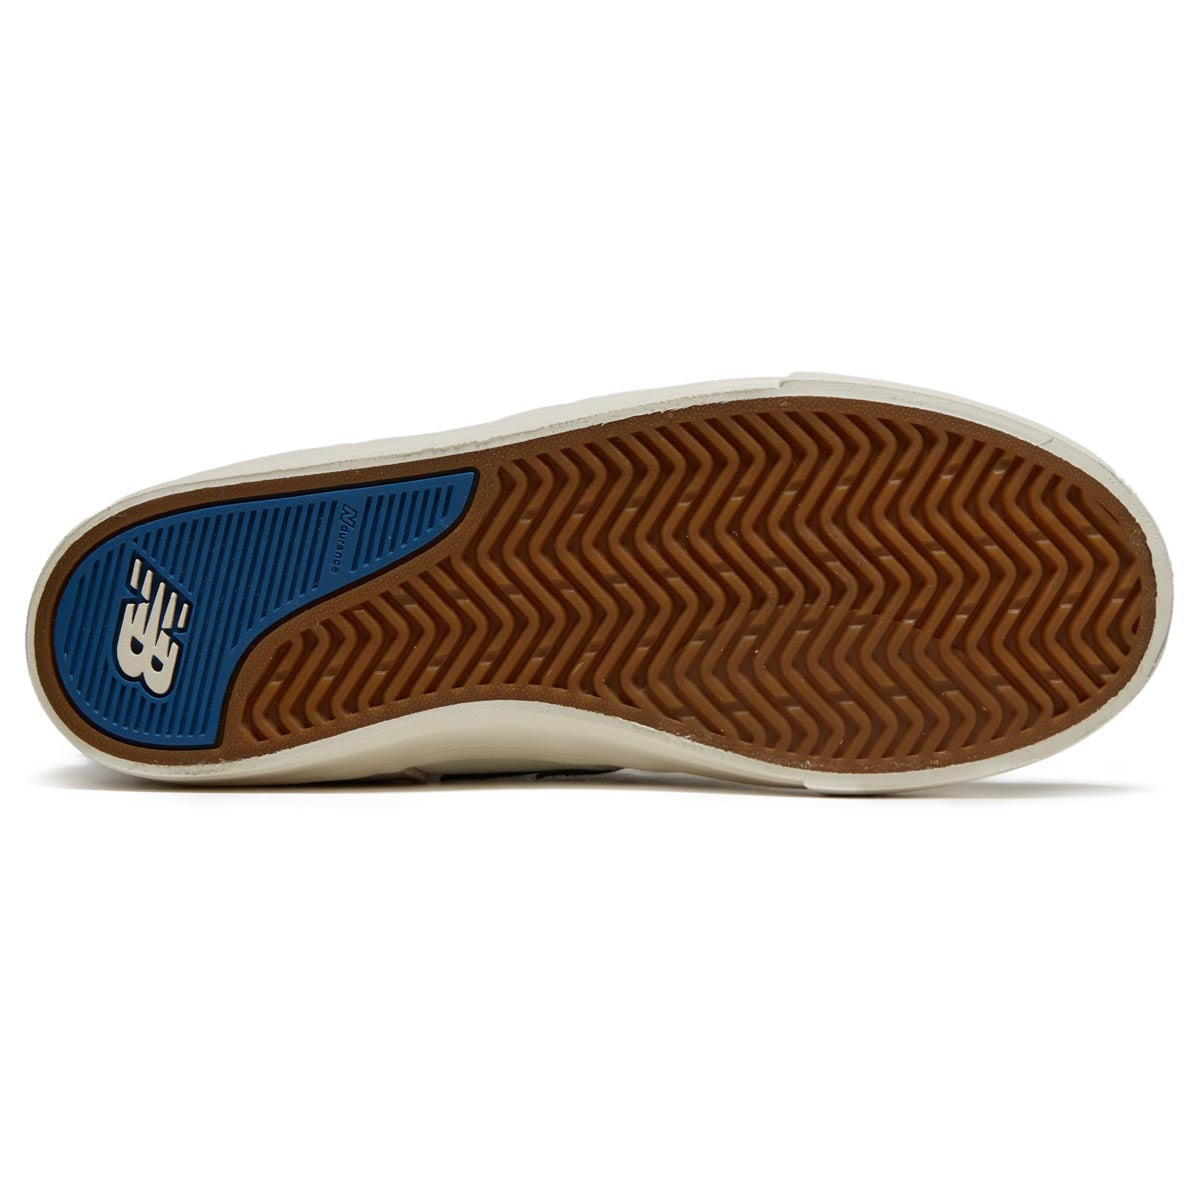 New Balance 306 Foy Shoes - Sea Salt image 4